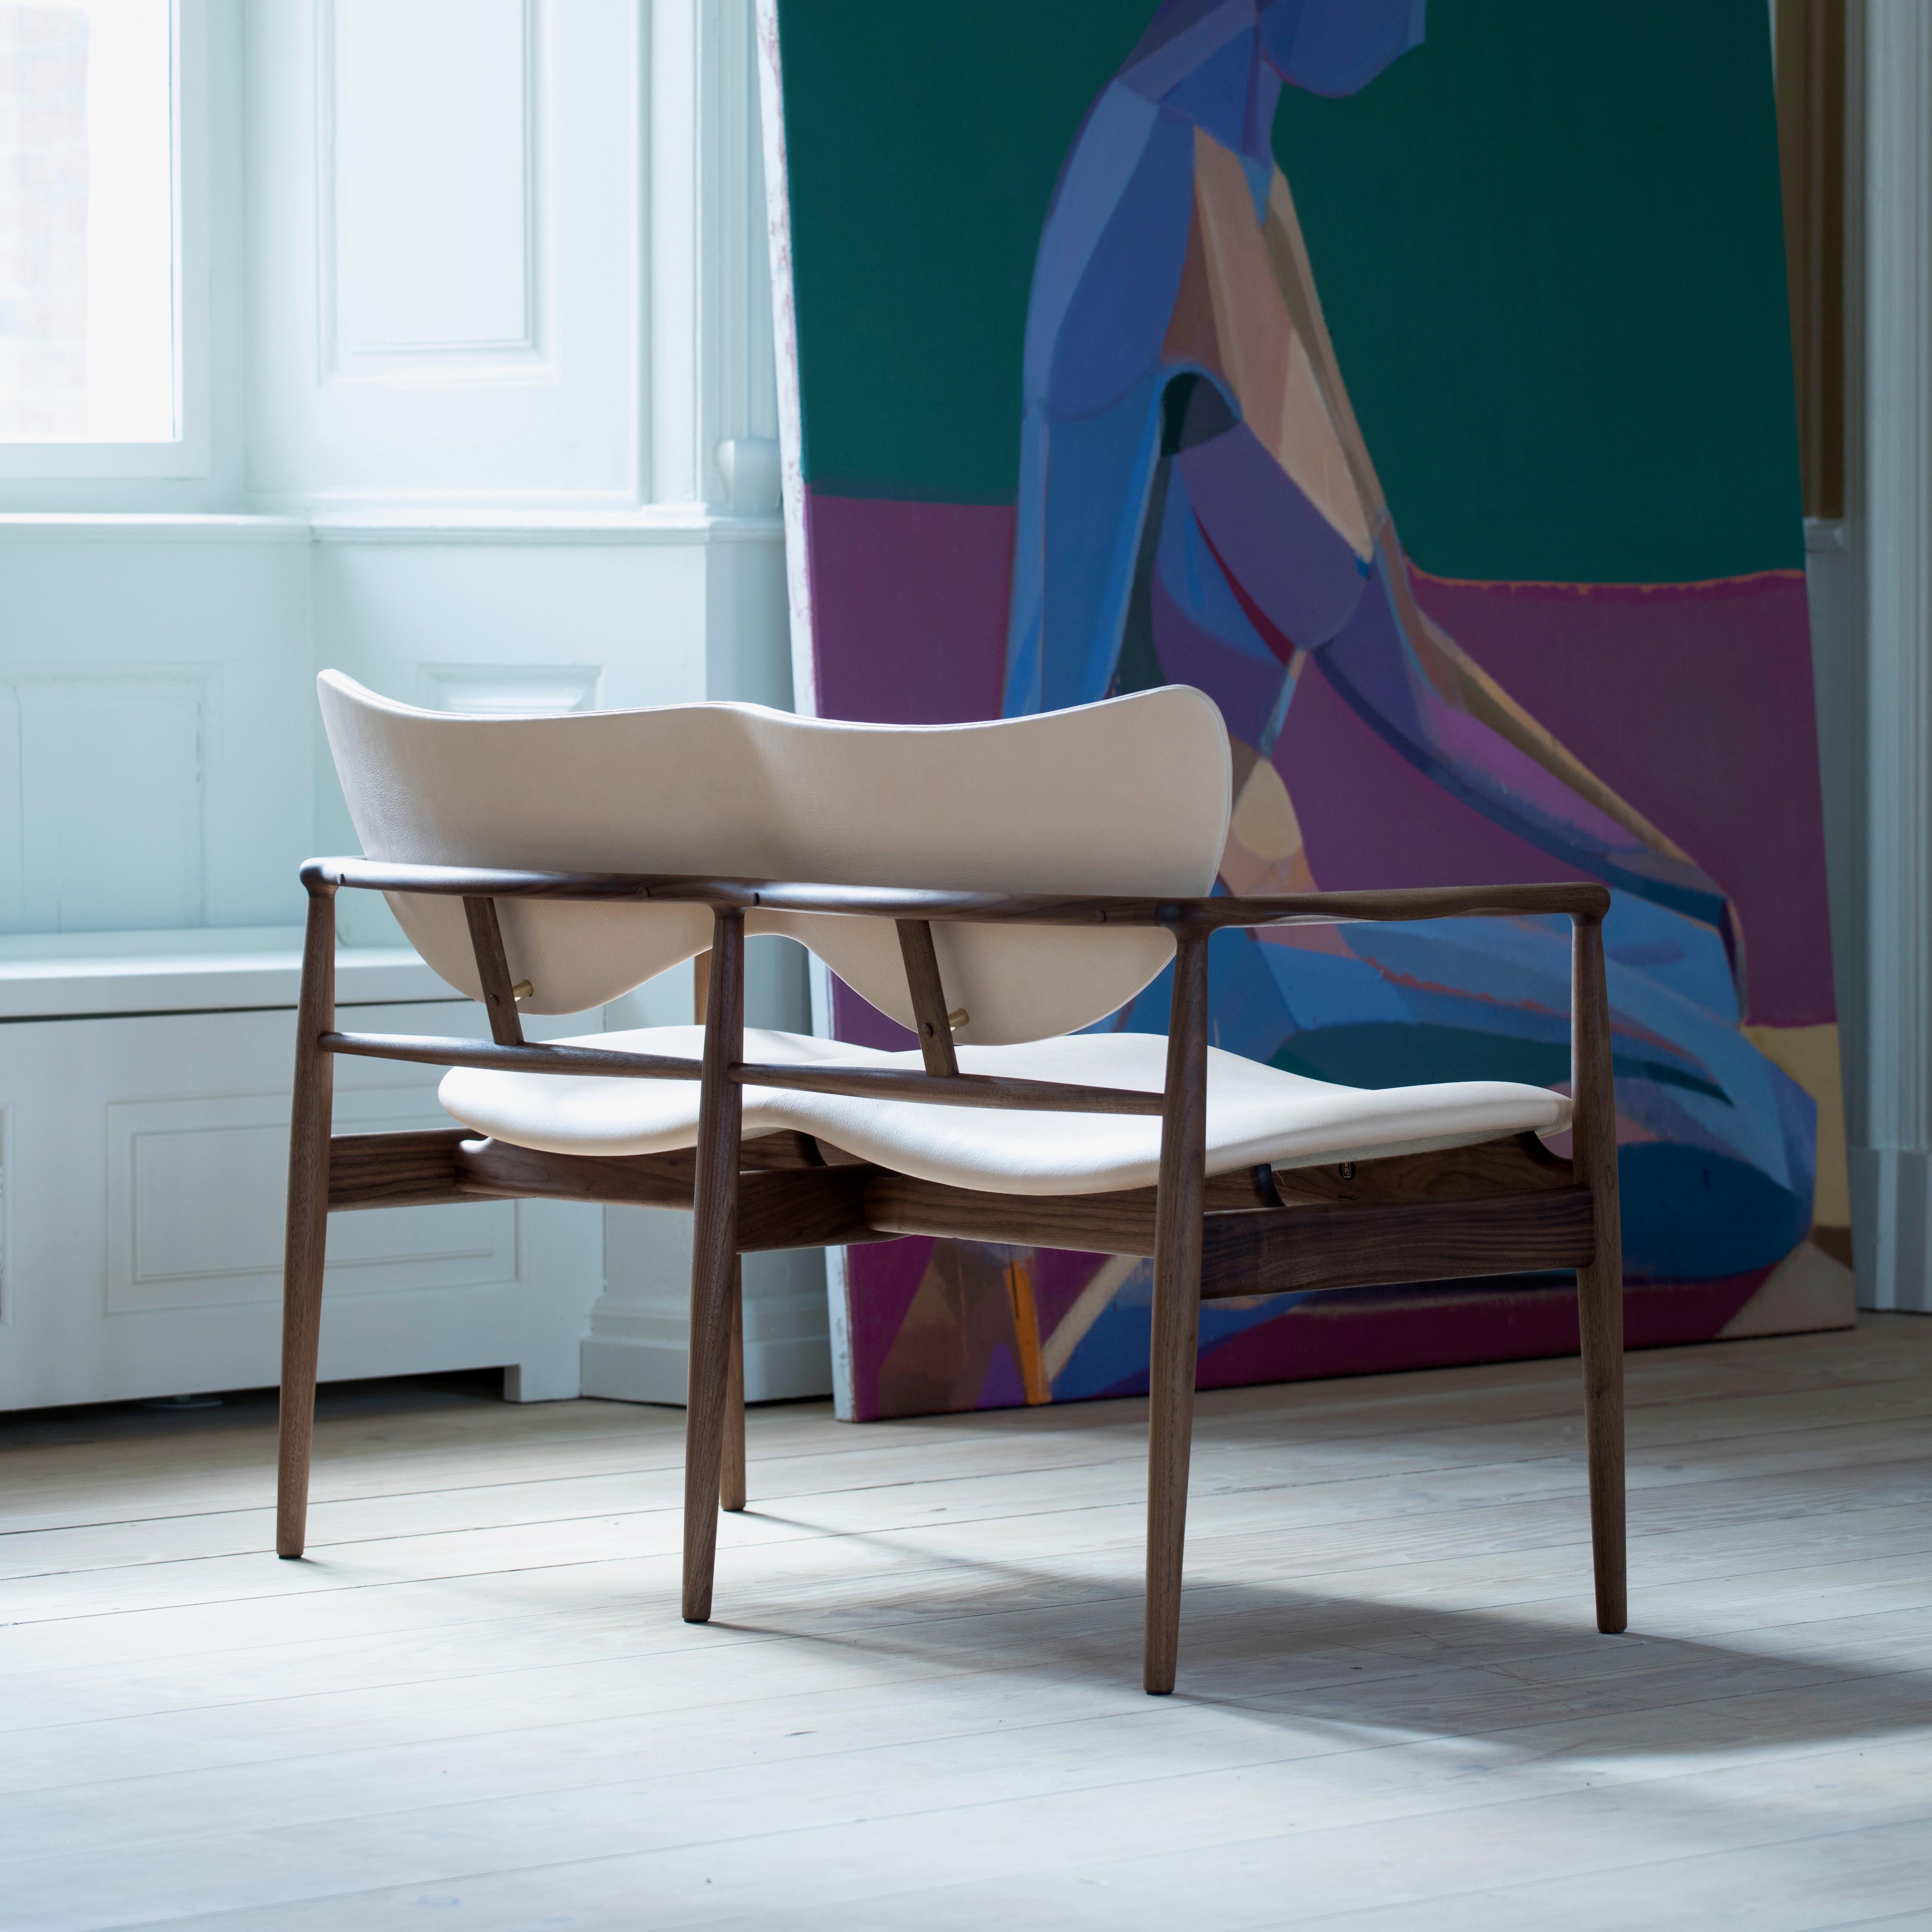 Finn Juhl 48 Sofa Bench Wood and Leather Iconic Danish Modern Design 7